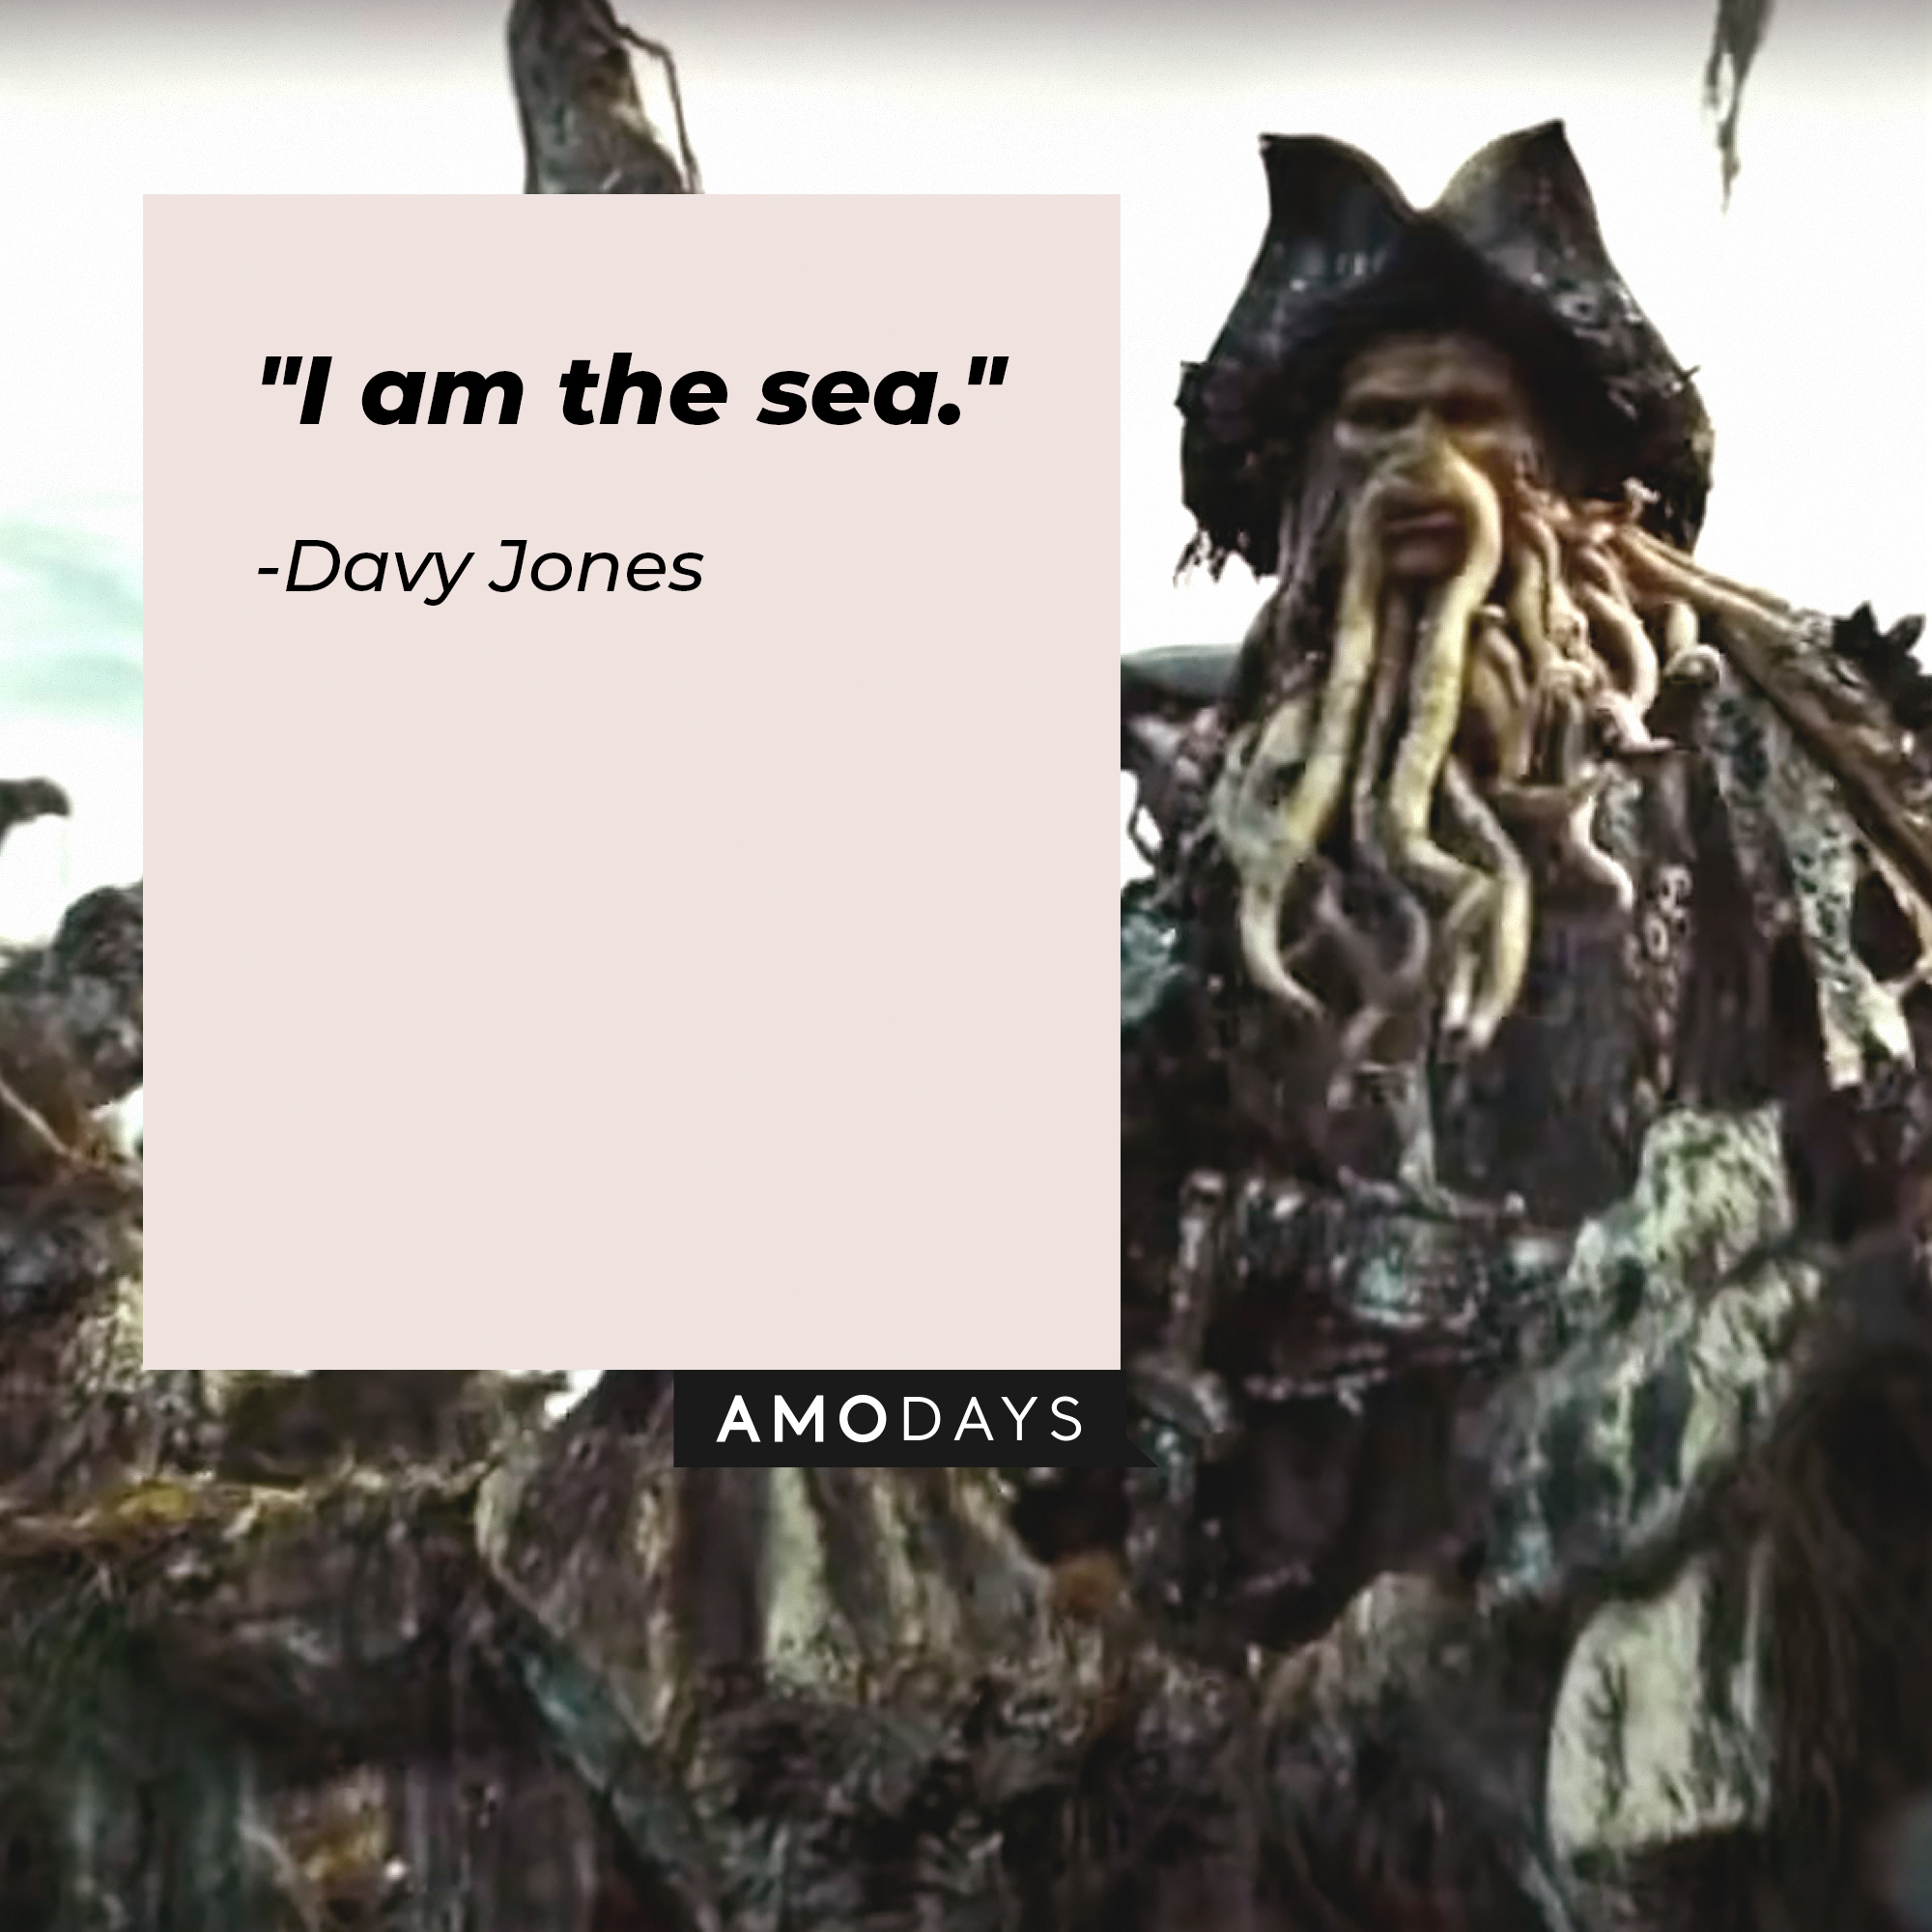 Davy Jones's quotes: "I am the sea." | Image: AmoDays